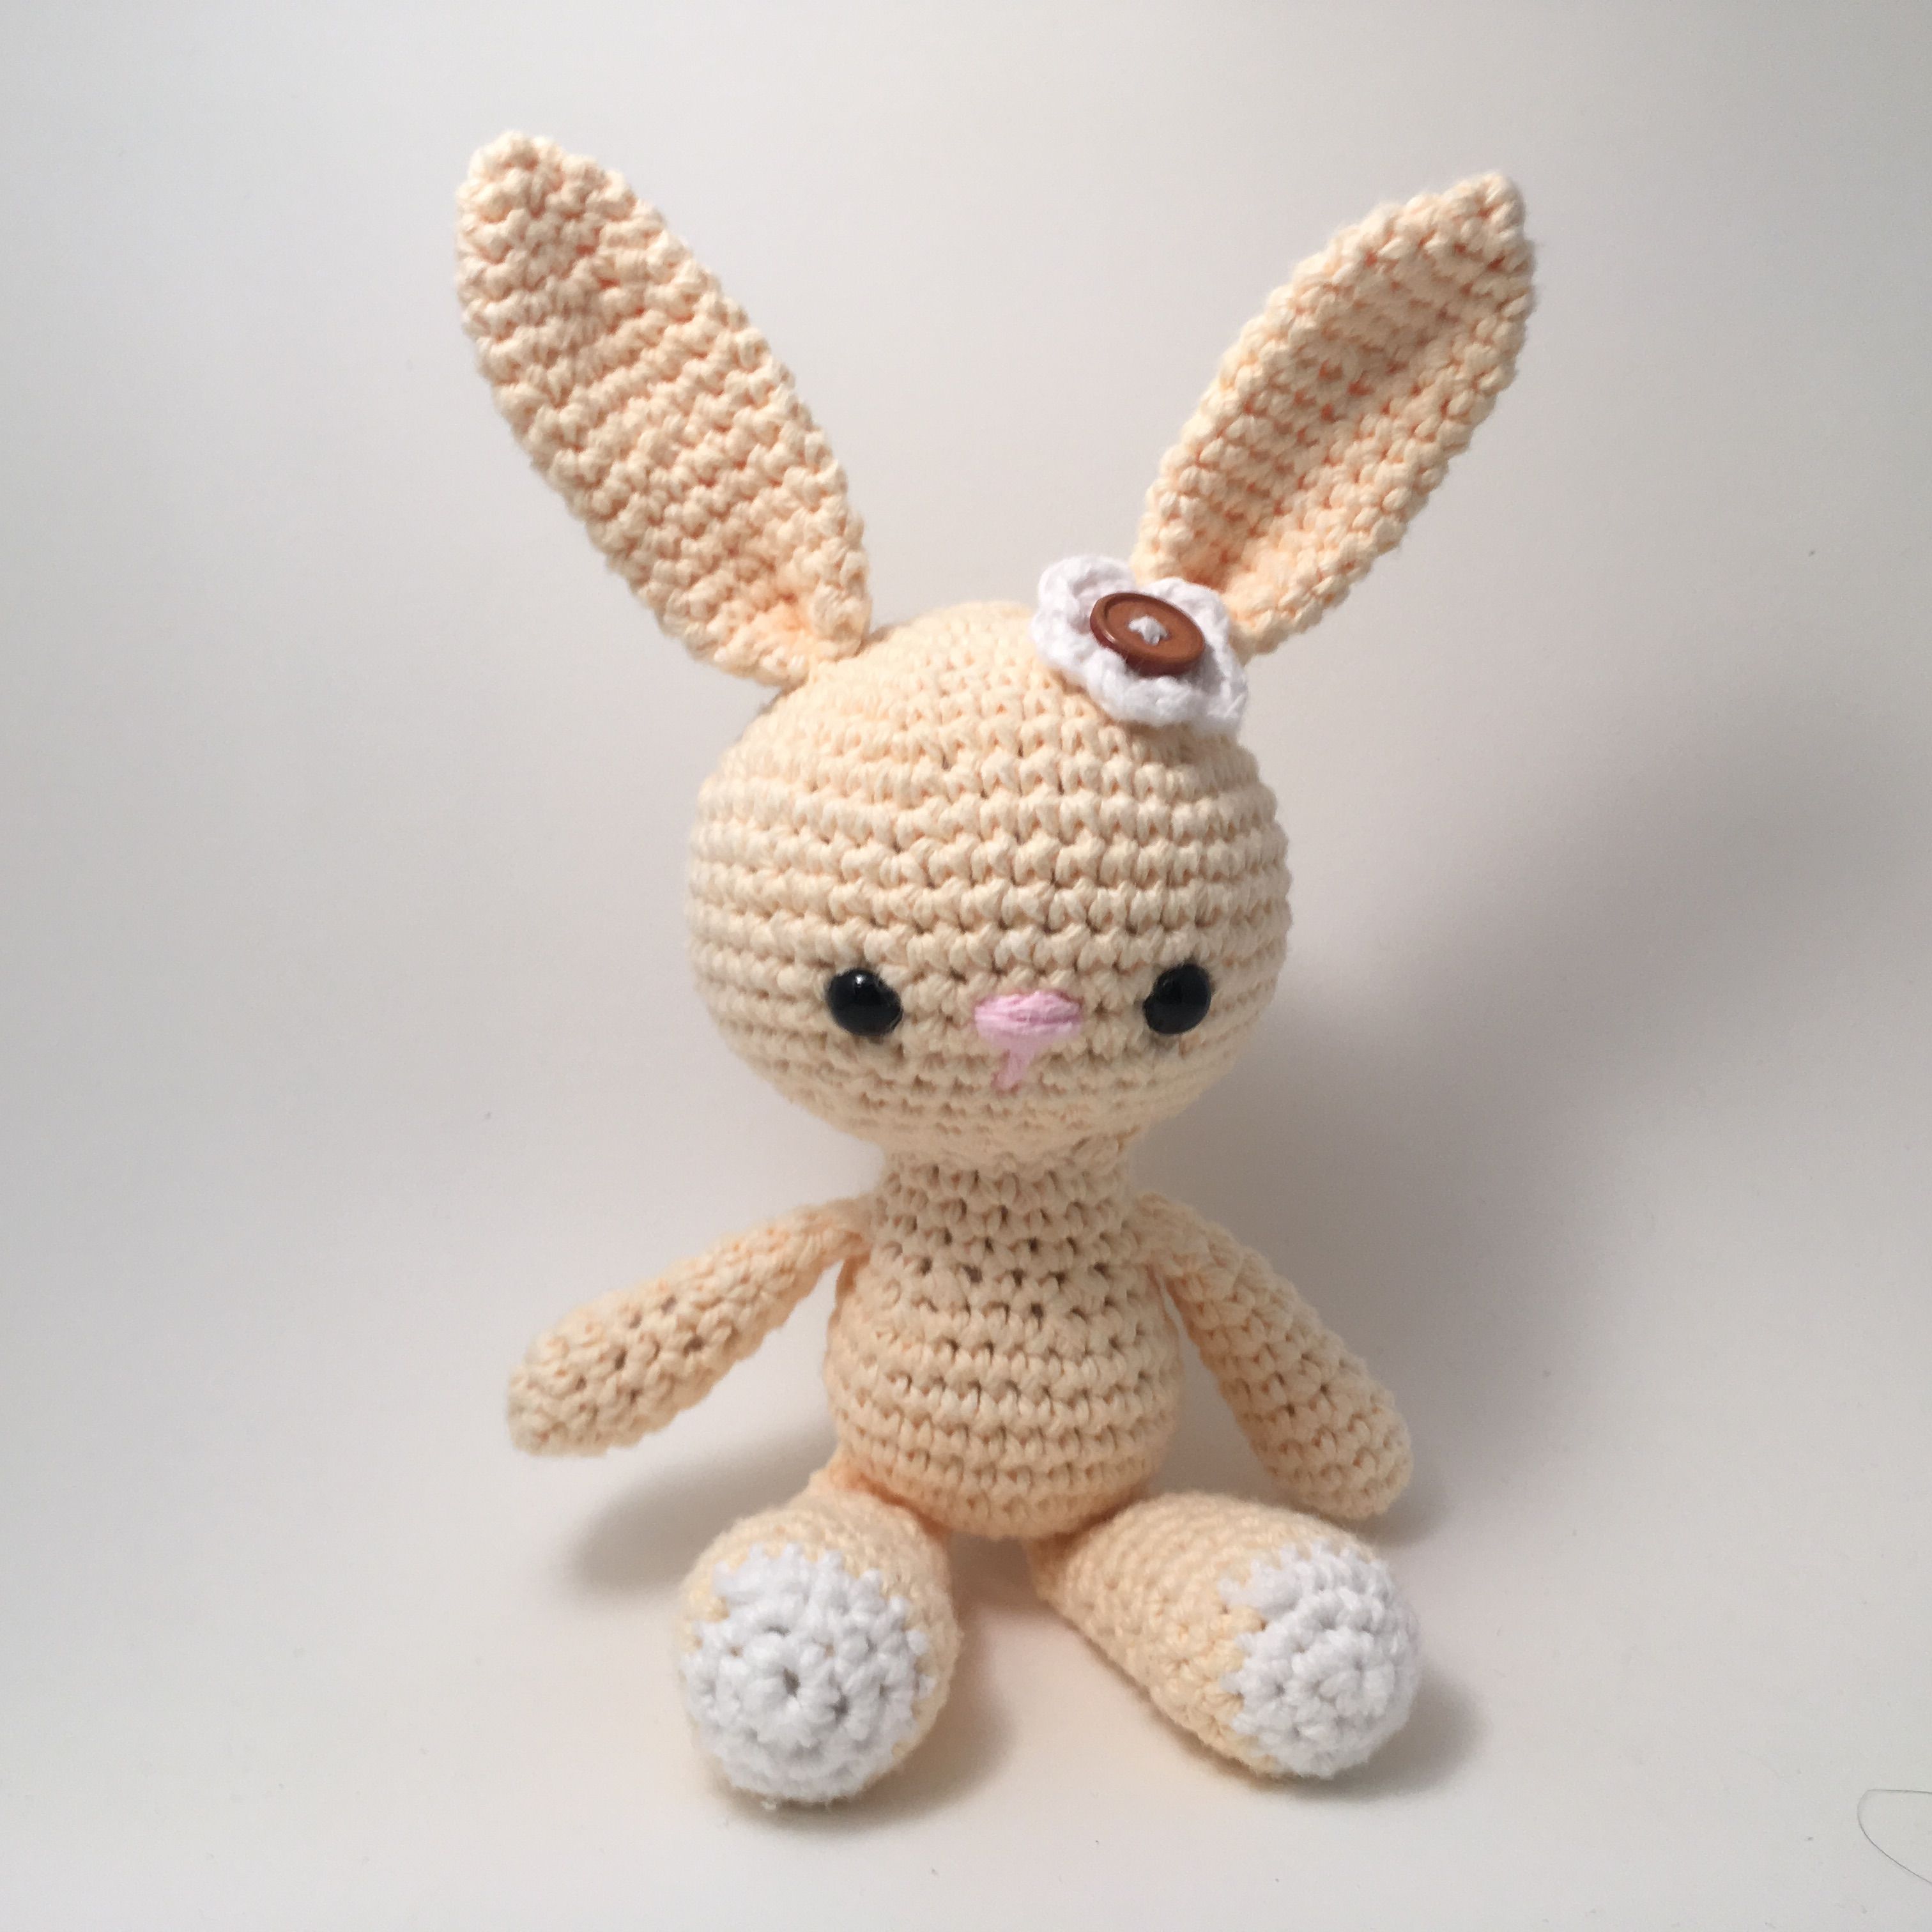 Crochet Kit for a Cute Amigurumi Animal Toy Gina the Giraffe DIY